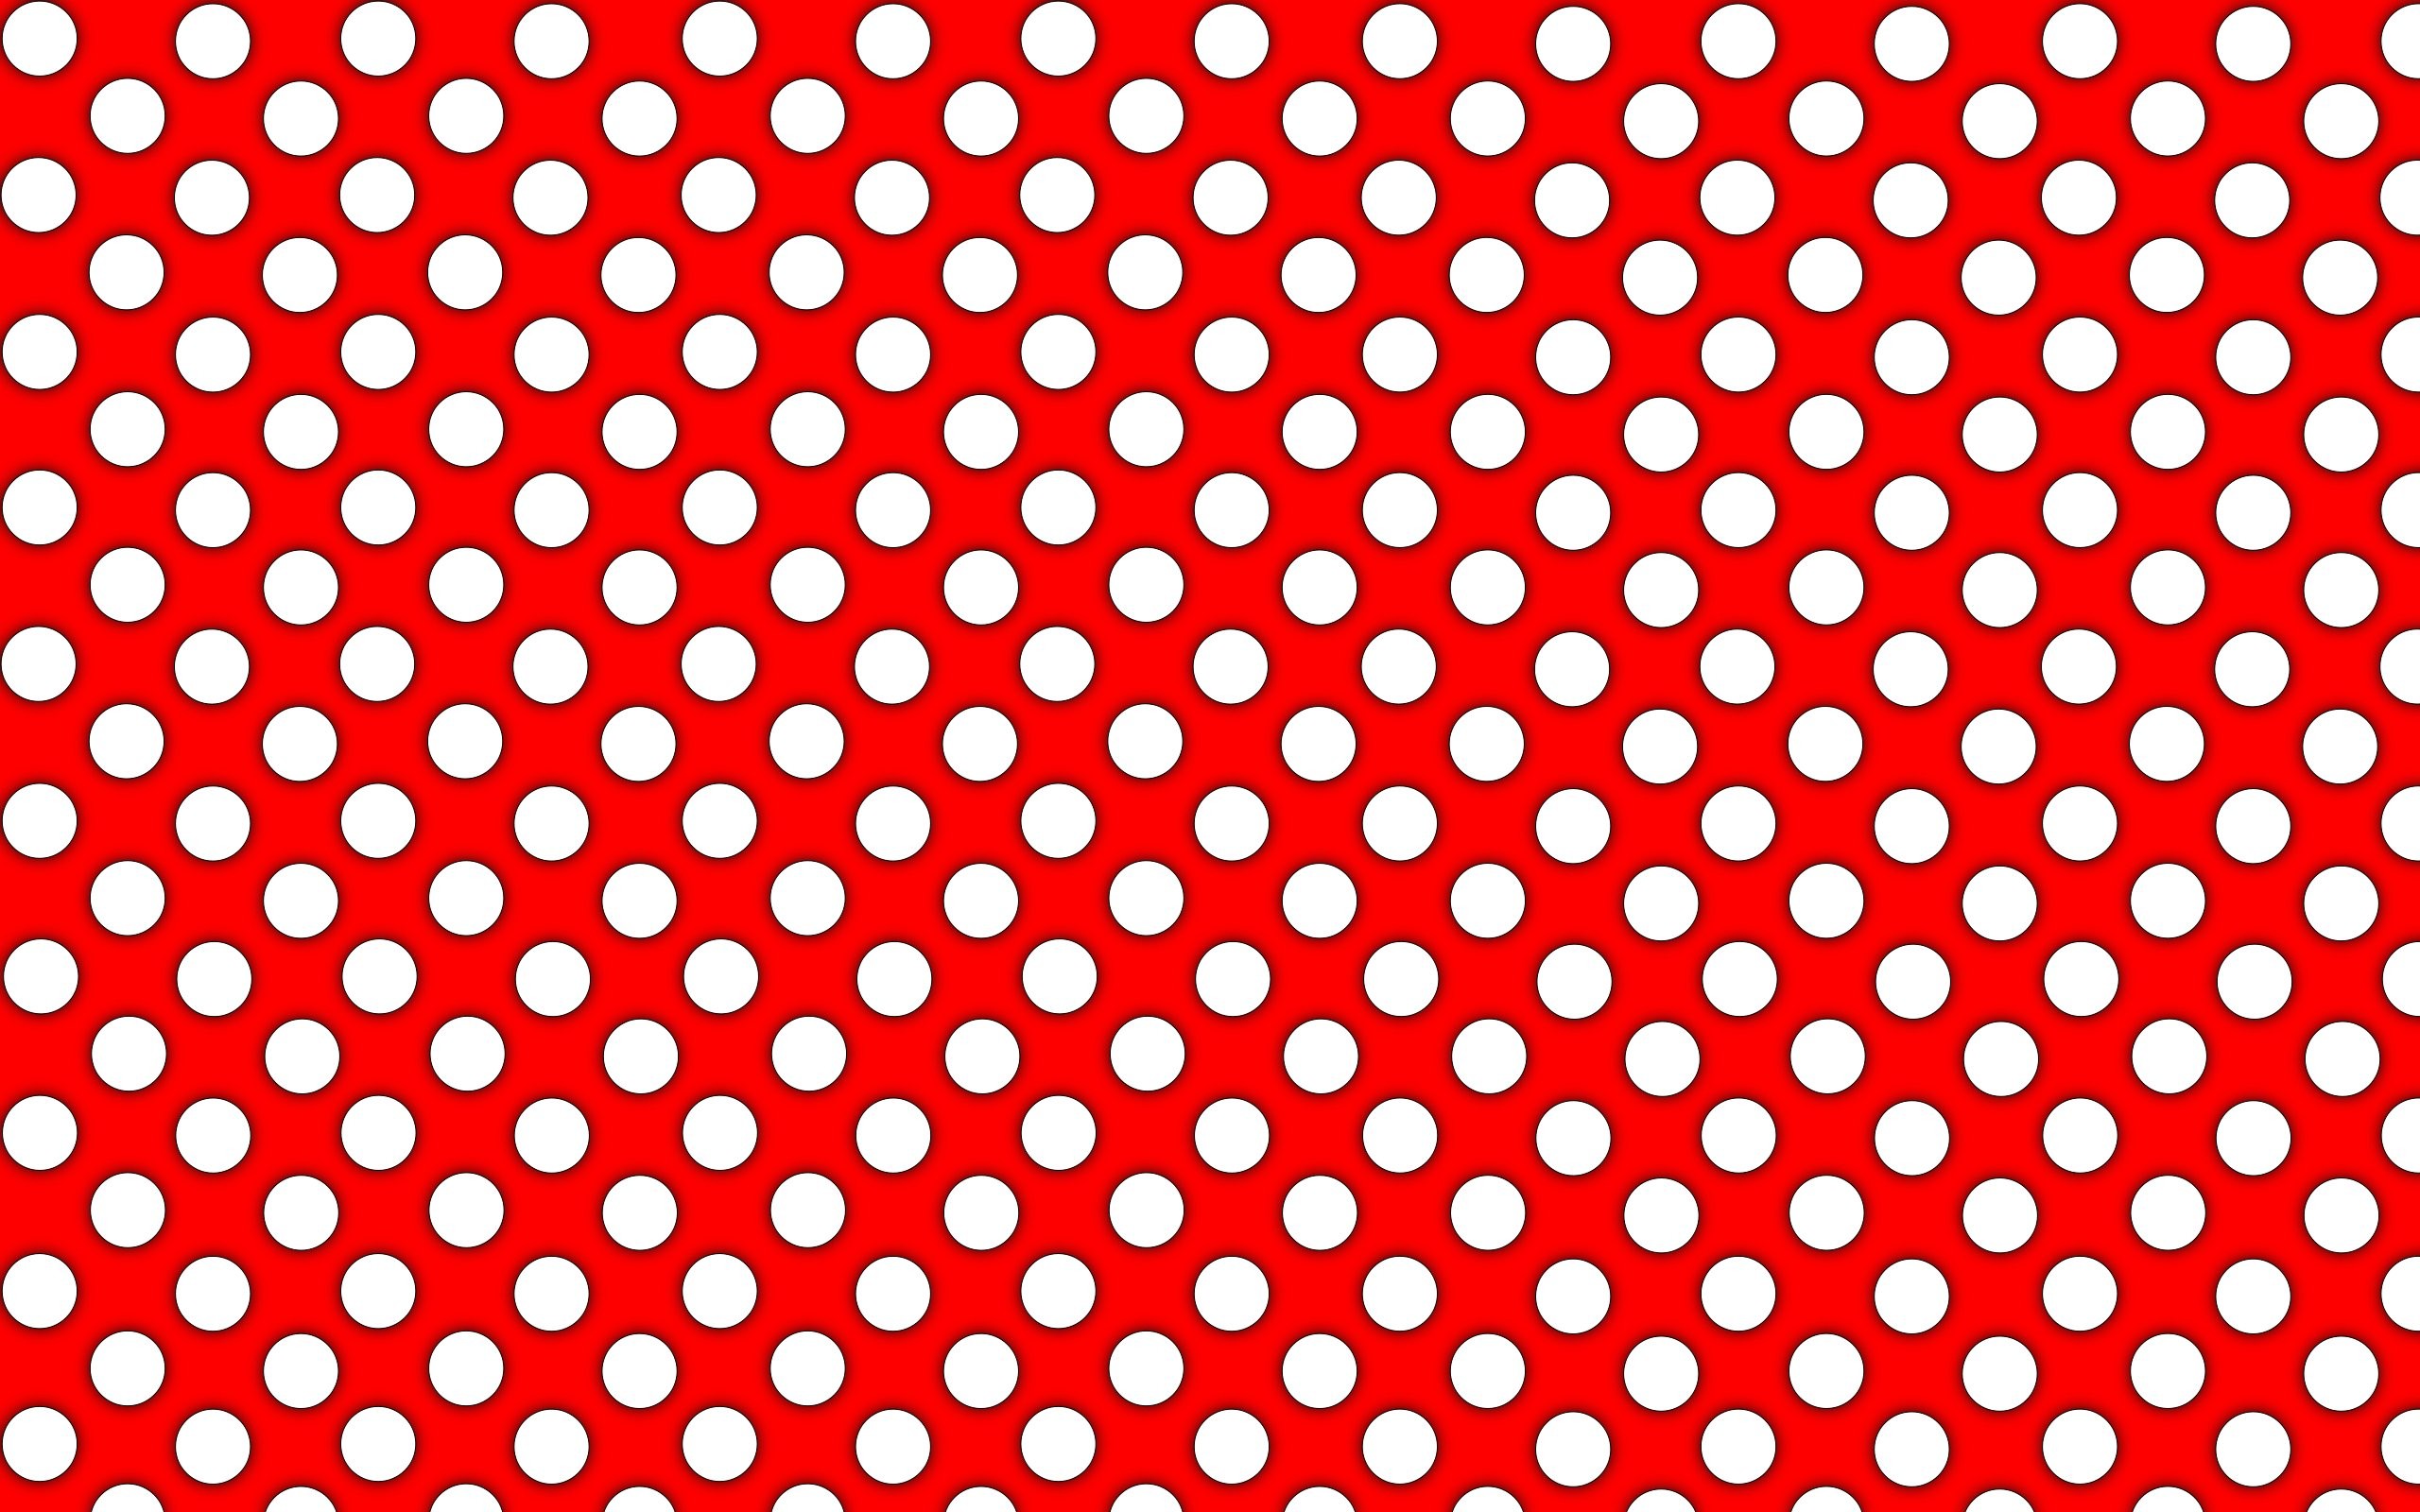 Hd Wallpaper Polka Dot Card Stock: Wallpapers for Gt Red Polka Dots .